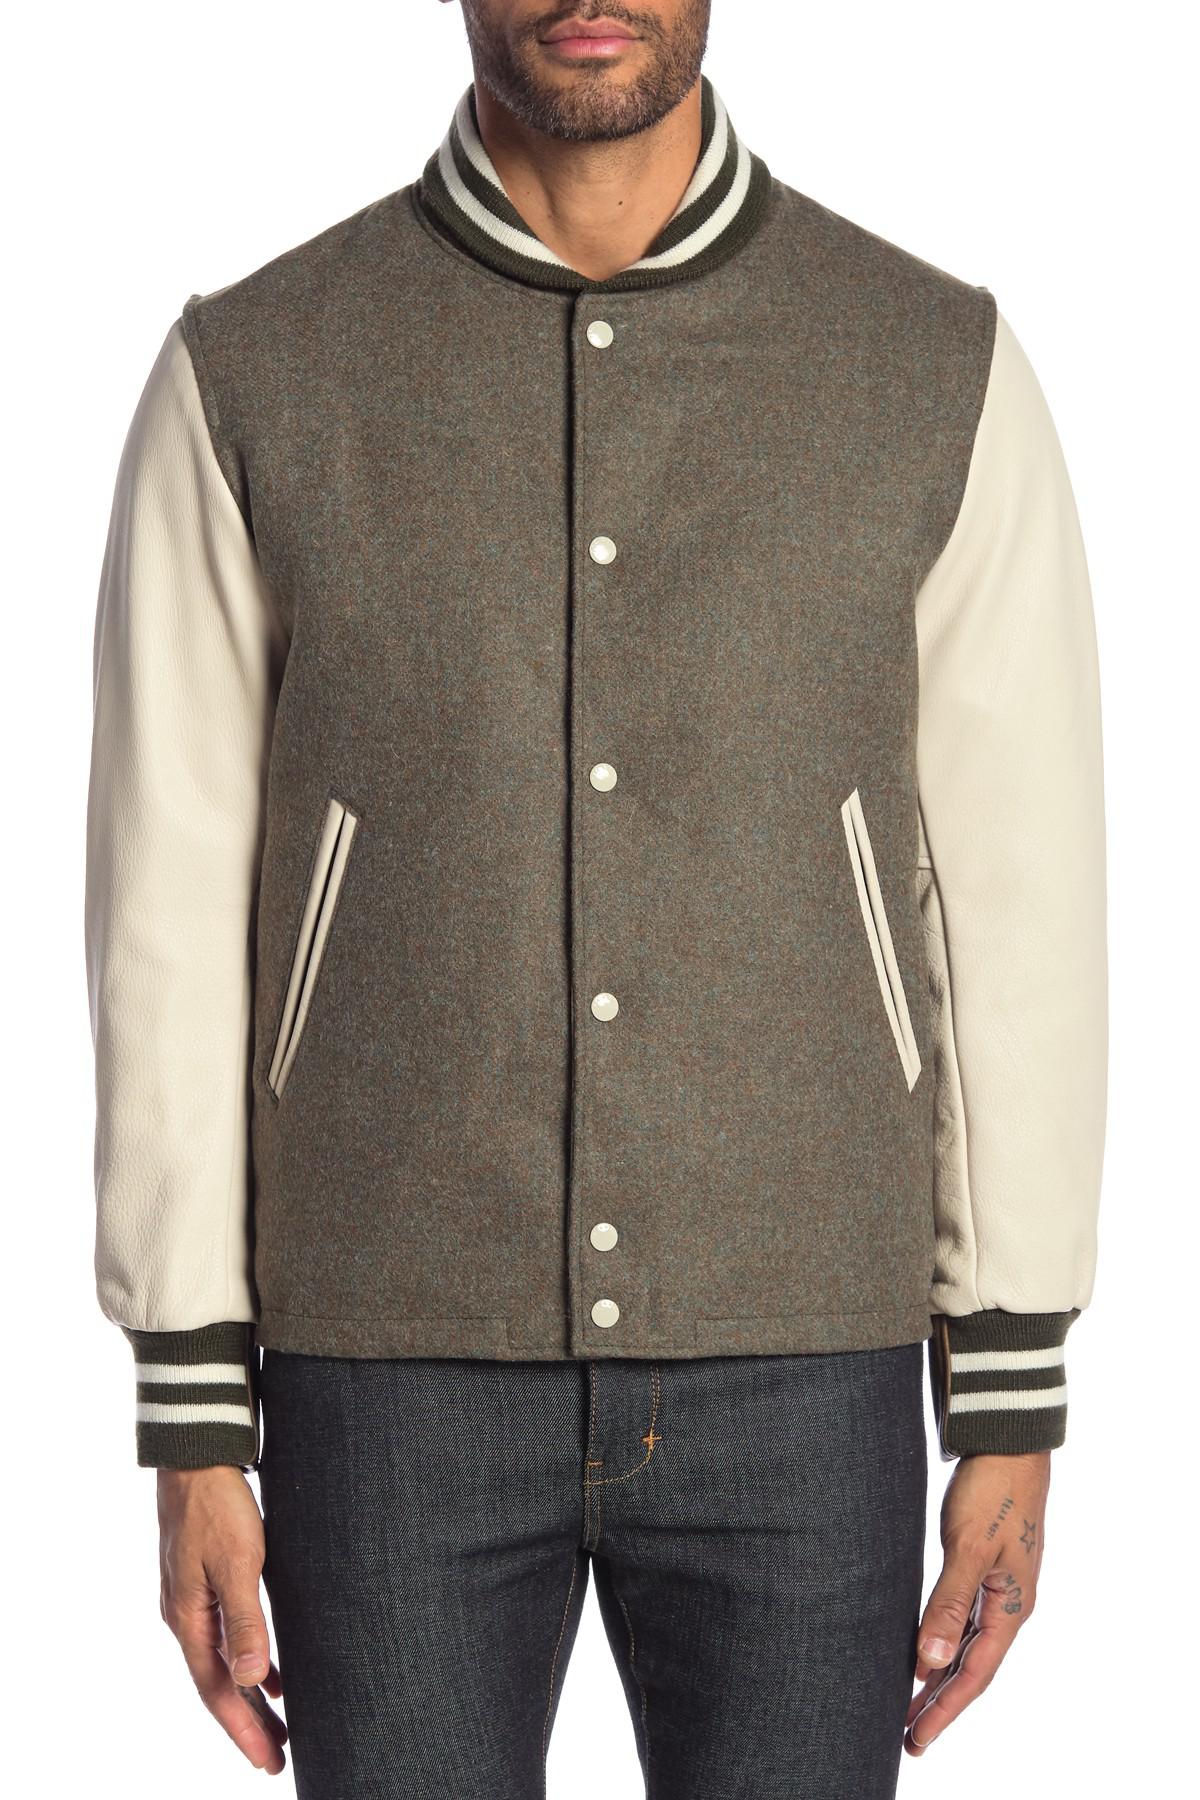 Rag & Bone Leather Panel Wool Varsity Jacket for Men - Lyst